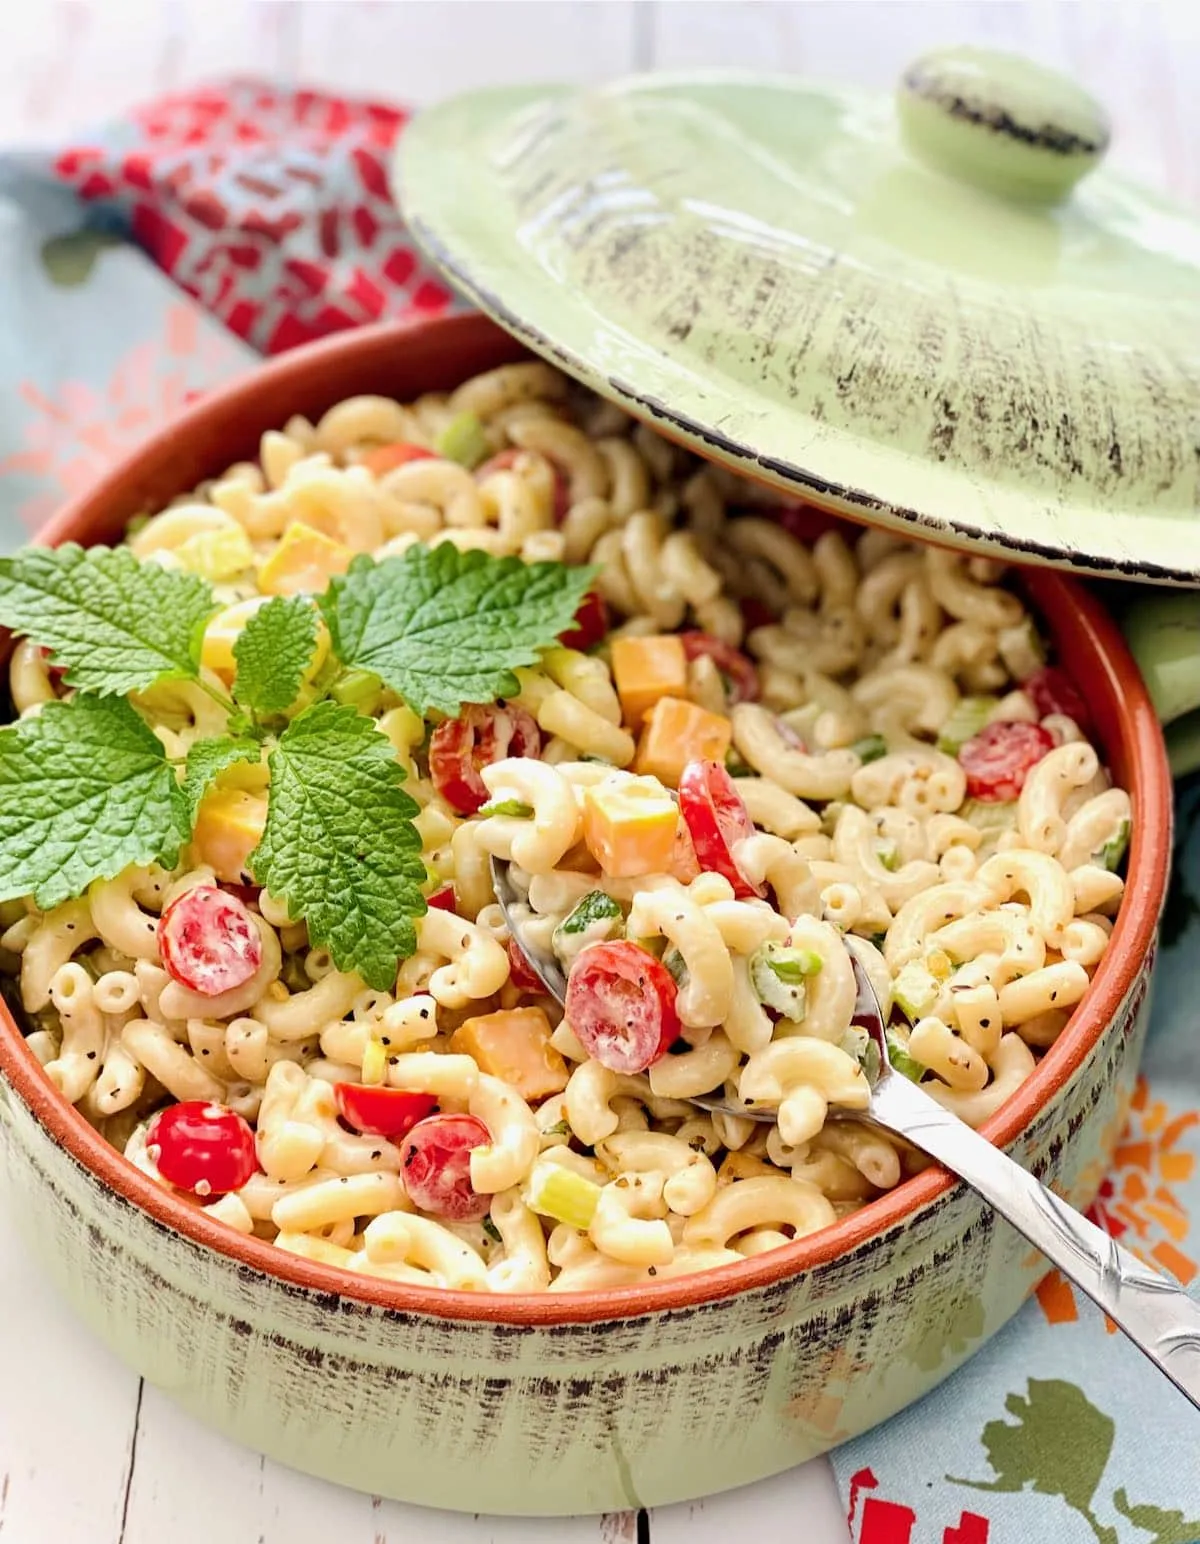 A close up of a bowl of macaroni salad.